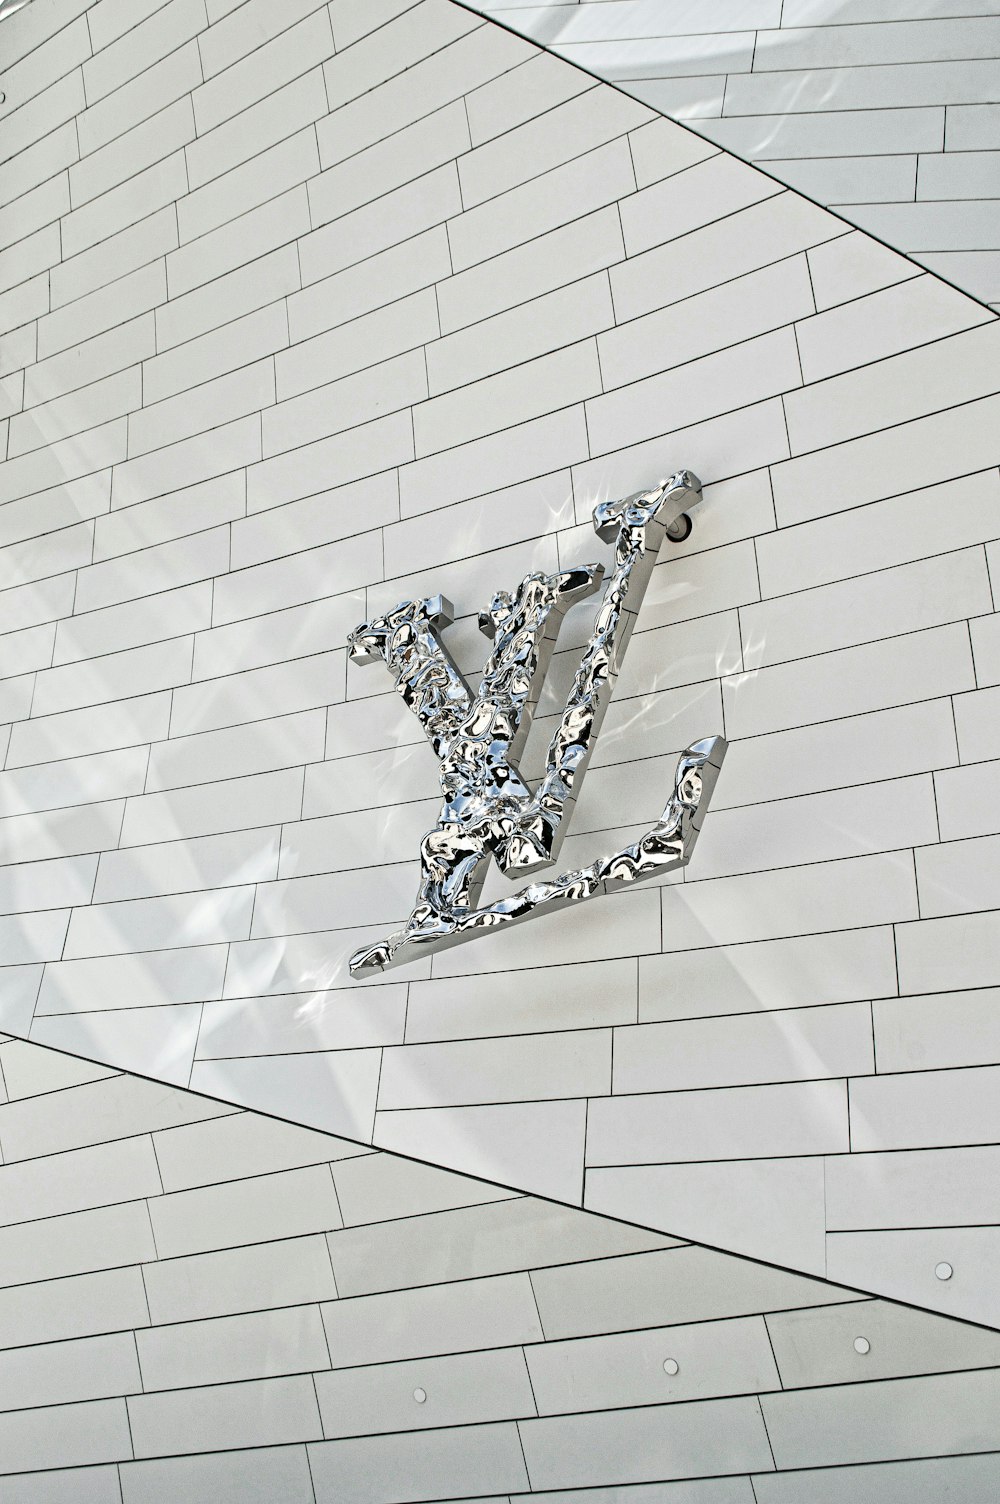 Luis Vuitton Pictures  Download Free Images on Unsplash